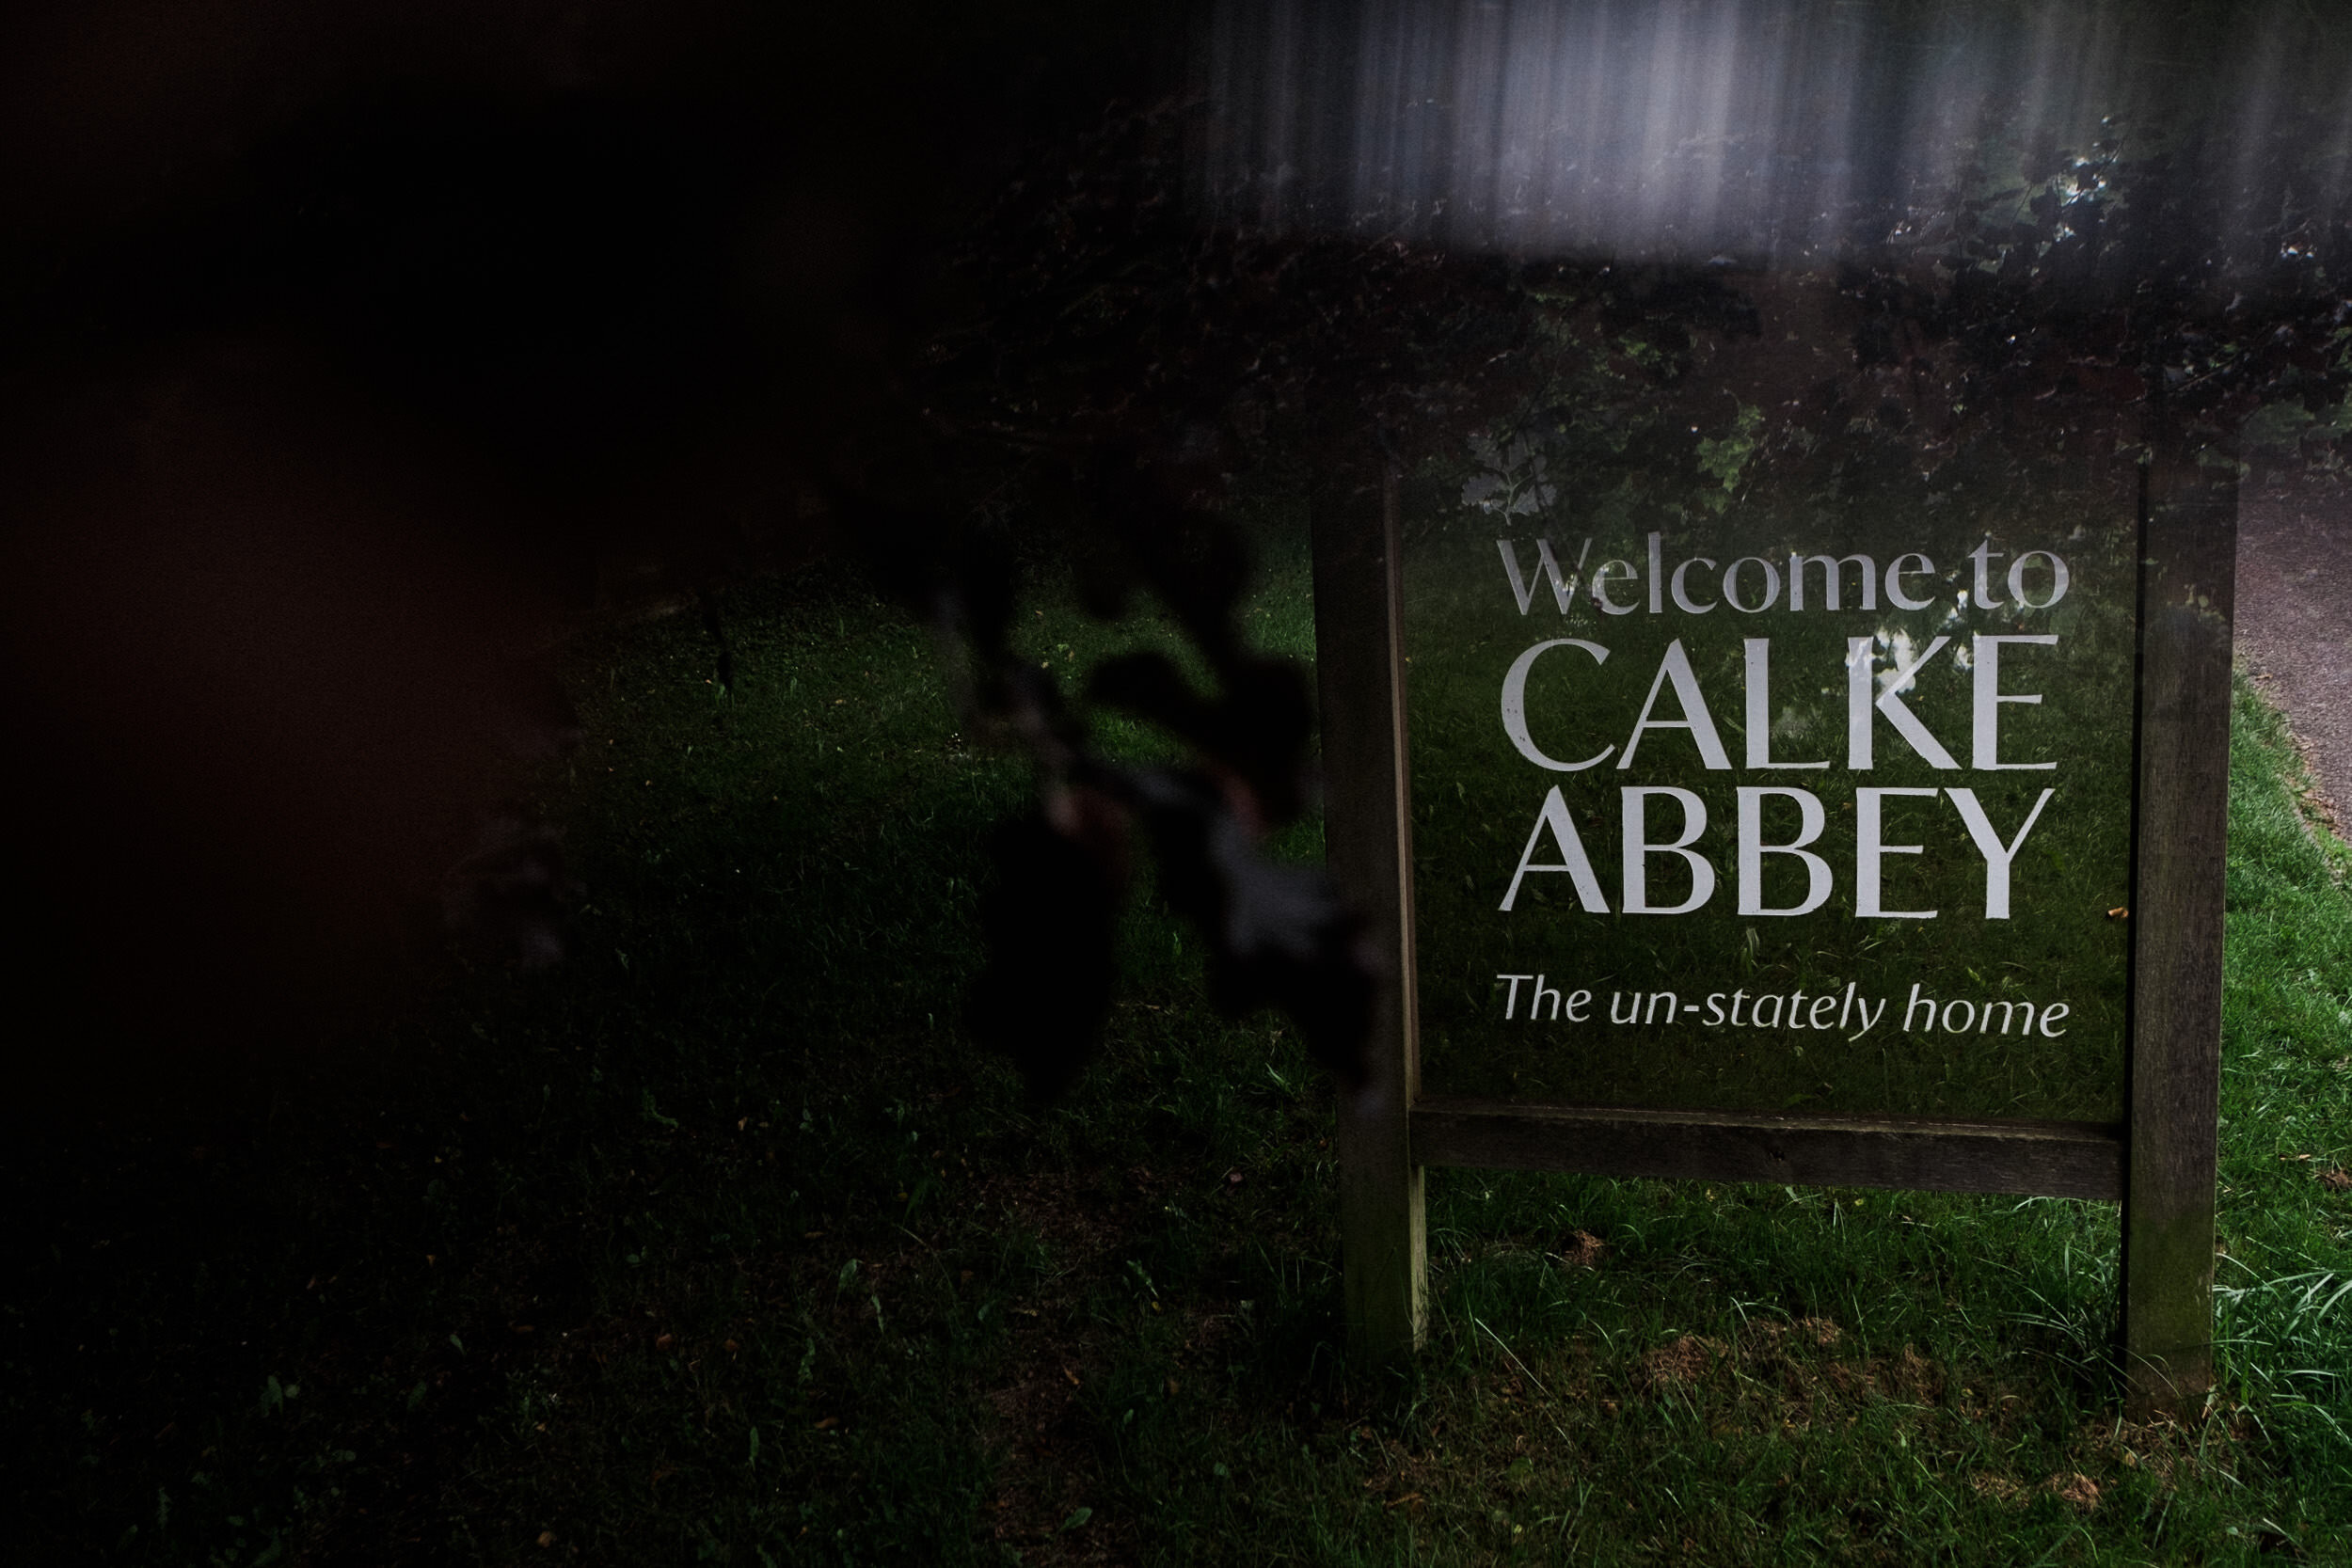 the-riding-school-calke-abbey-derbyshire-edgy-luxury-alternative-documentary-wedding-photographer-2500px_100001.jpg